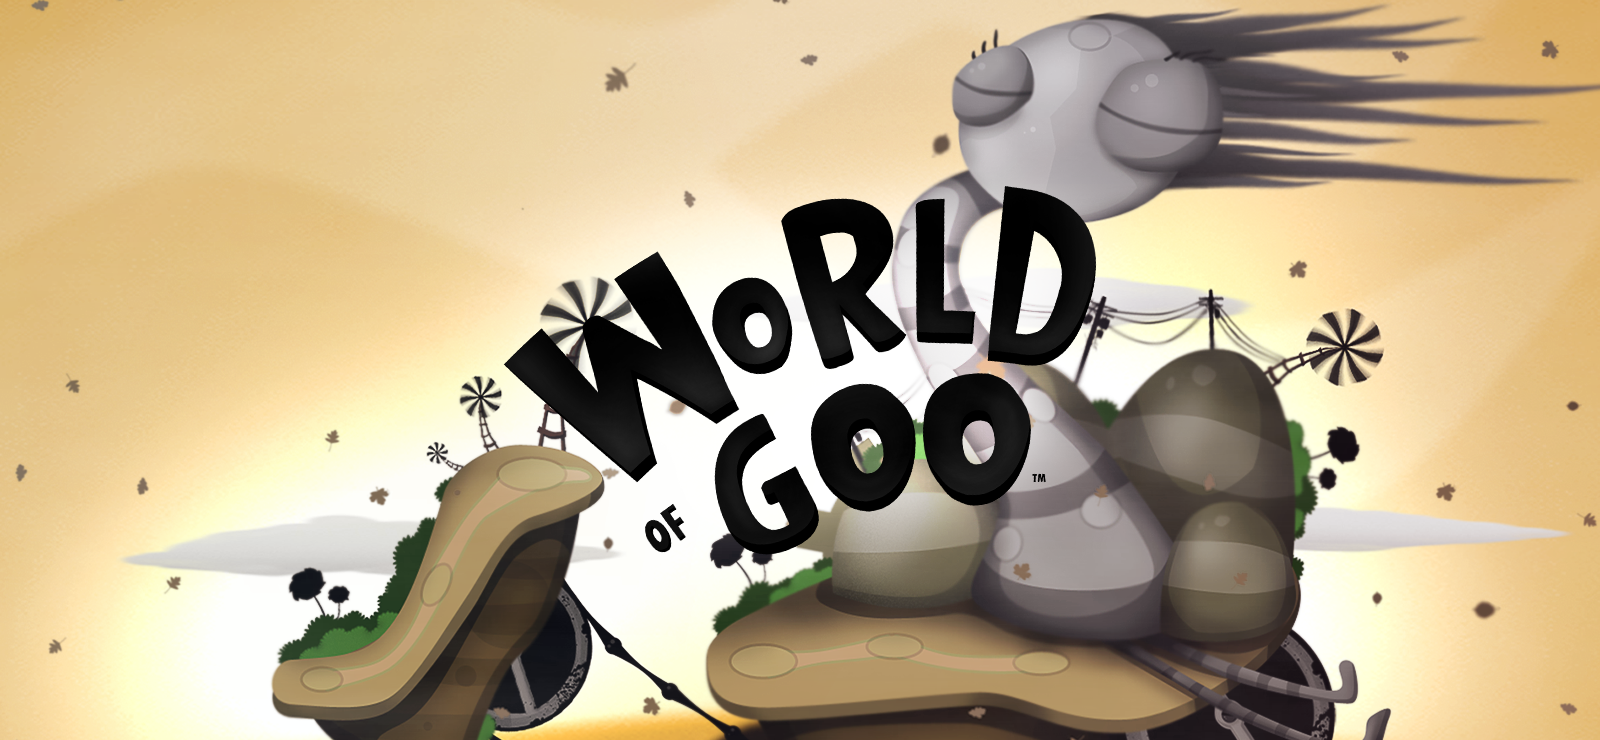 World Of Goo